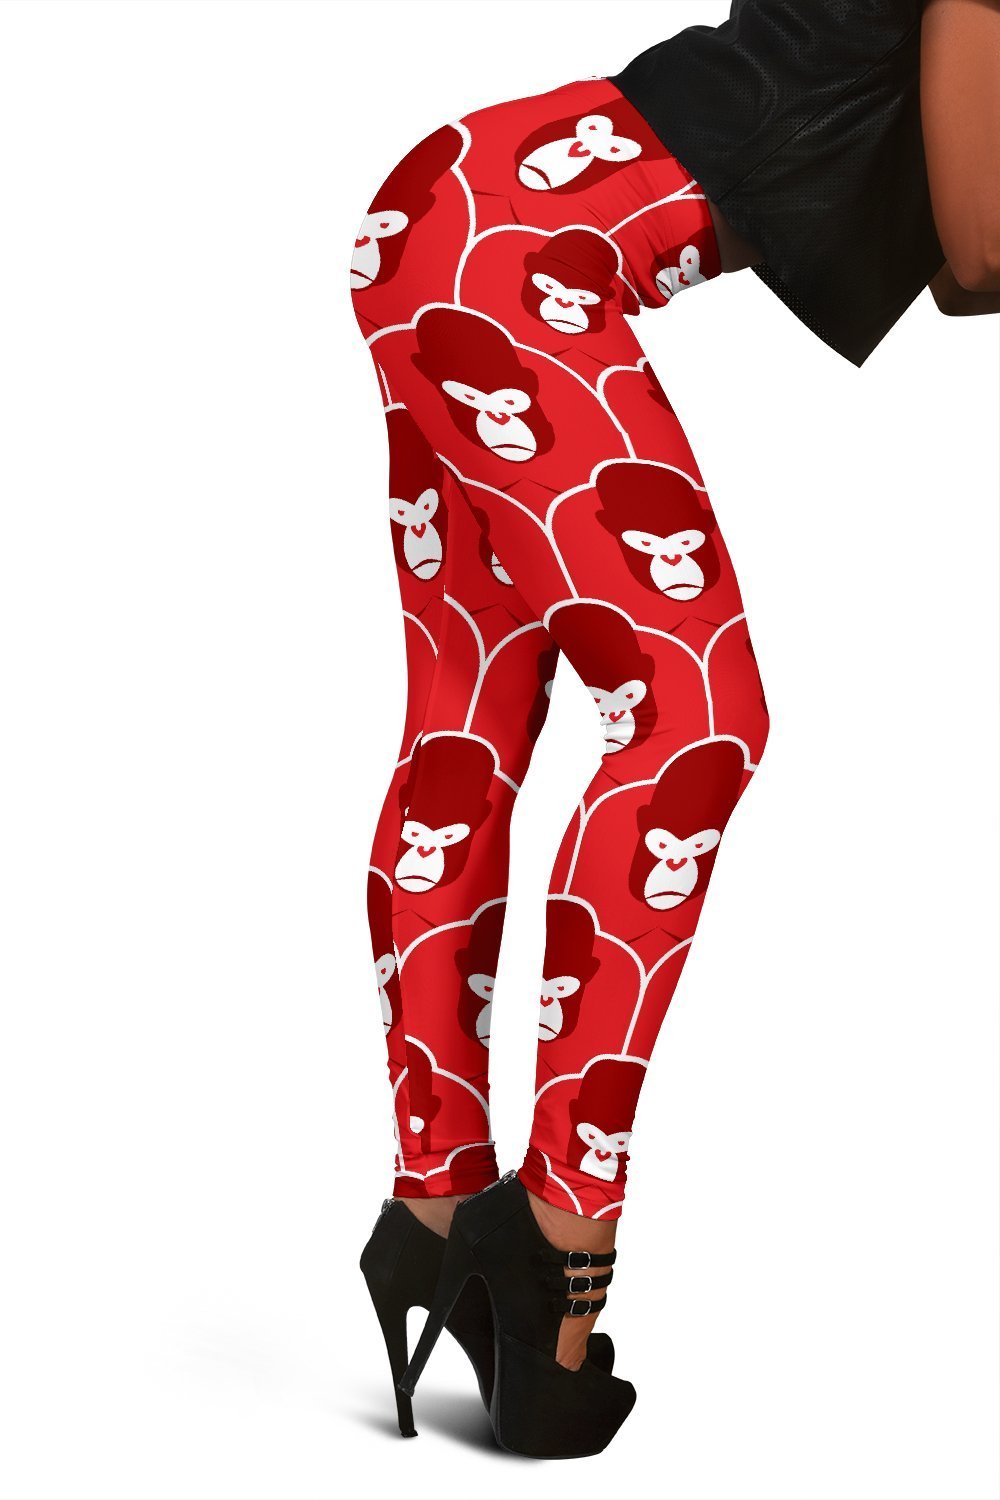 Gorilla Red Pattern Print Women Leggings-grizzshop